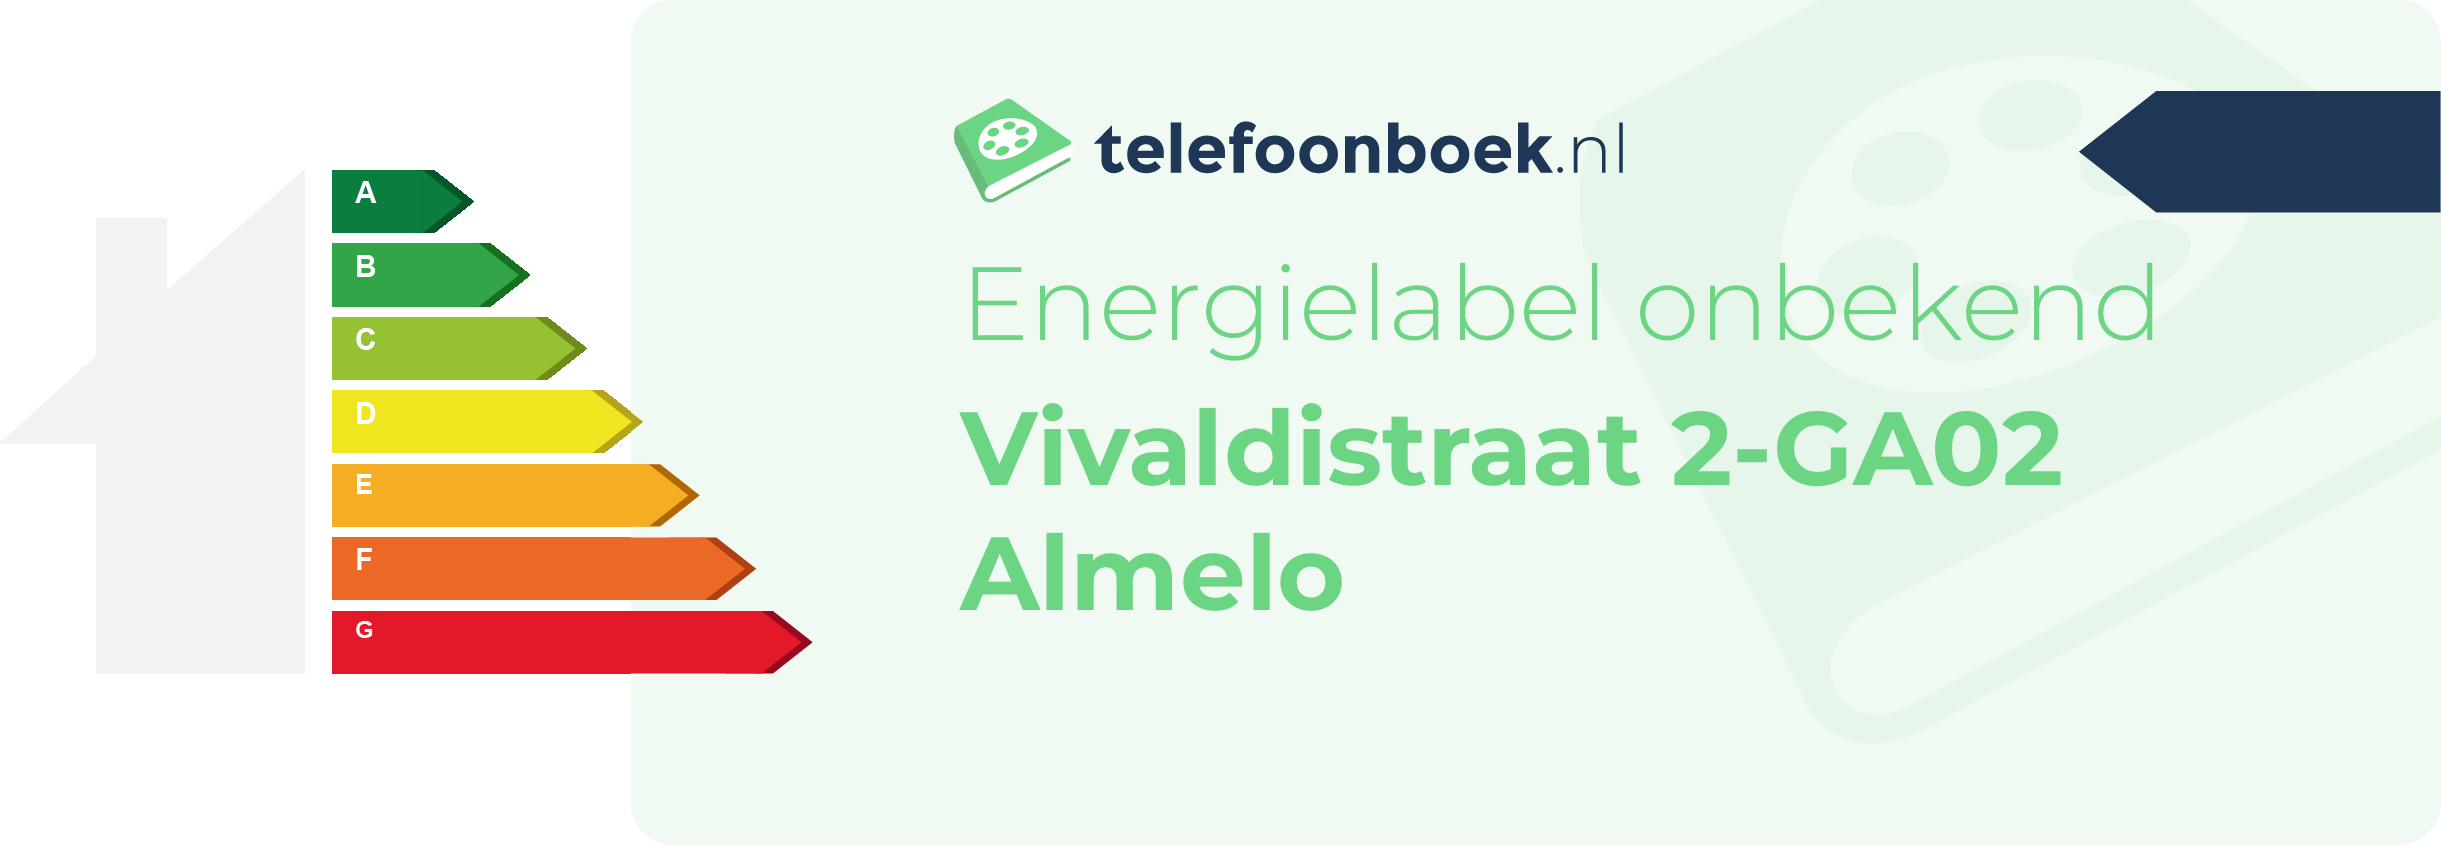 Energielabel Vivaldistraat 2-GA02 Almelo